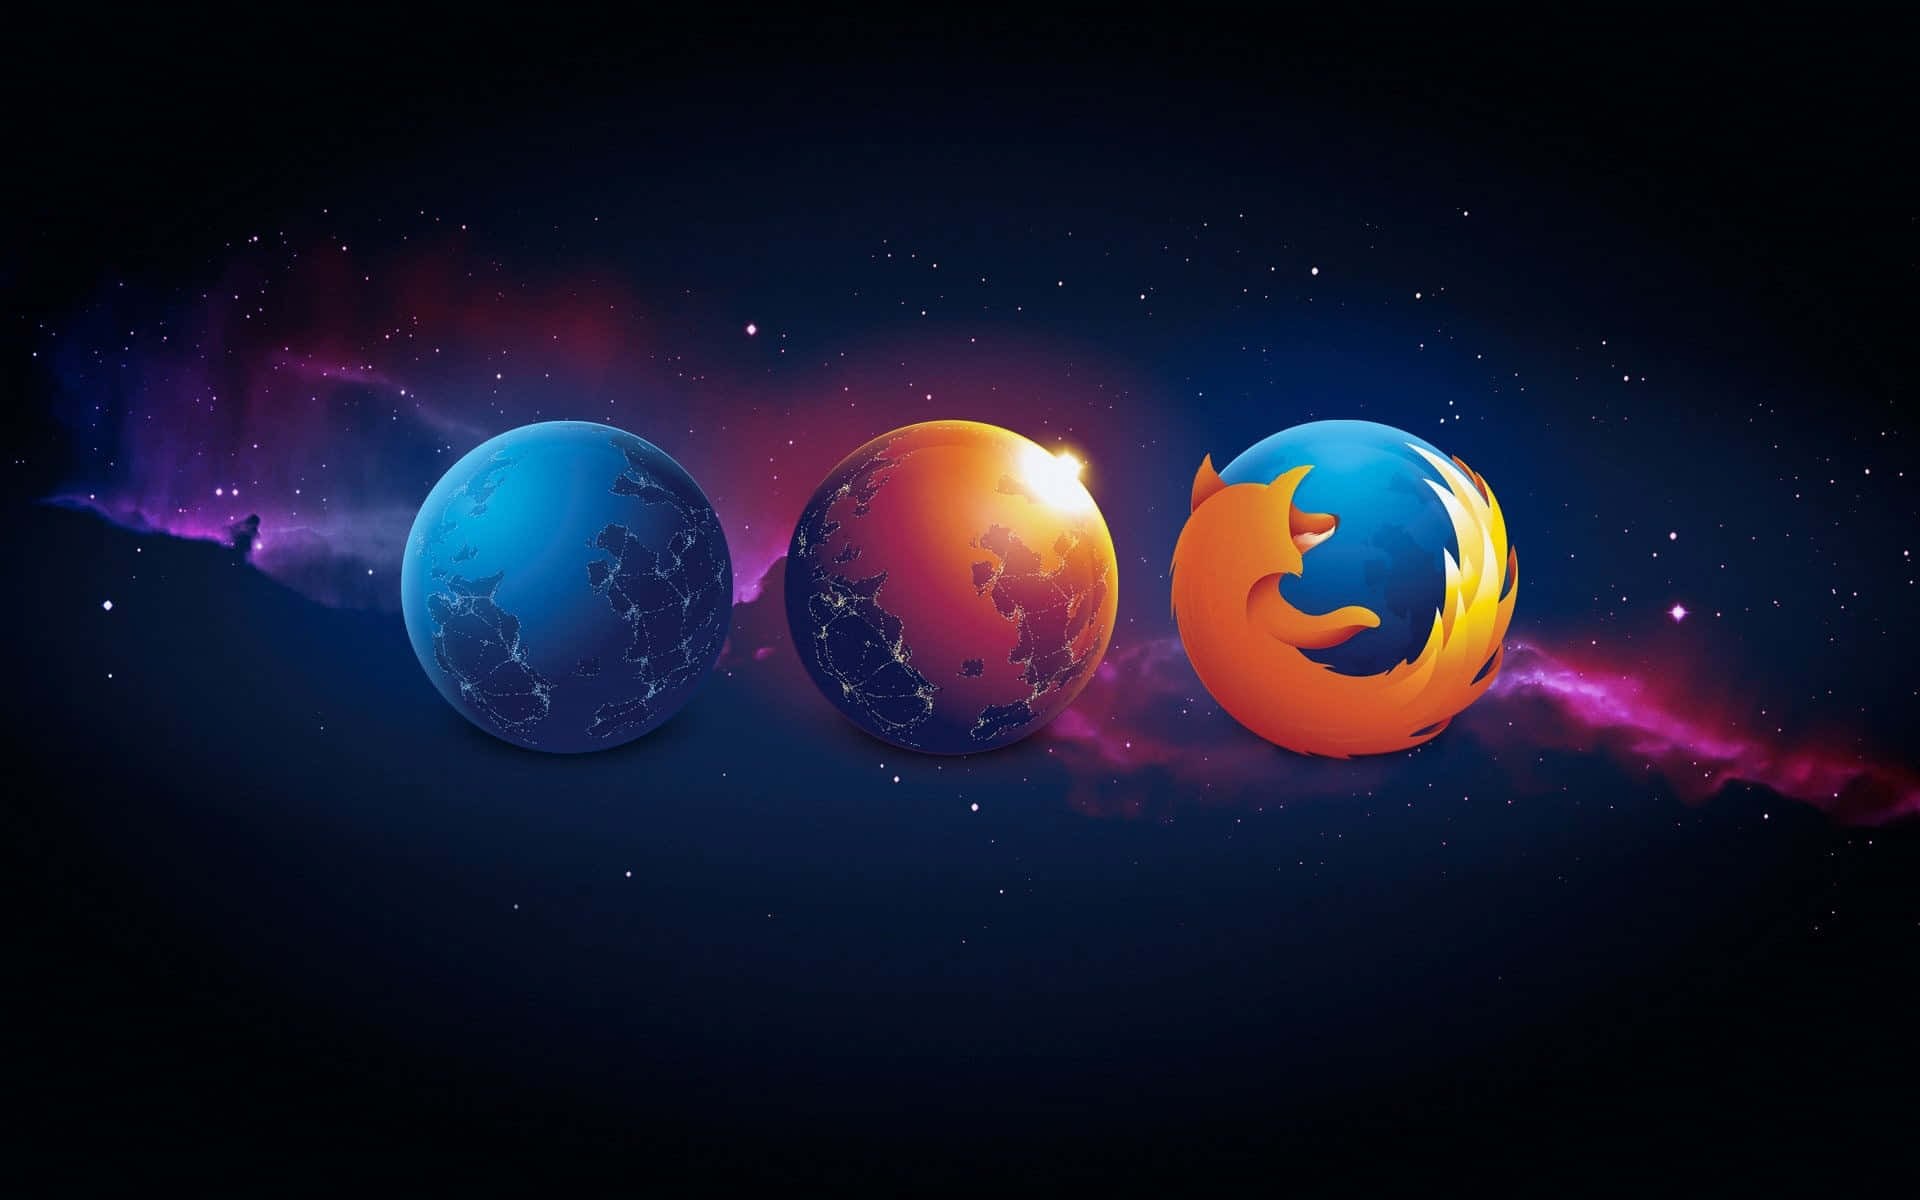 Vibrant Firefox Emblem on a Dark Background Wallpaper